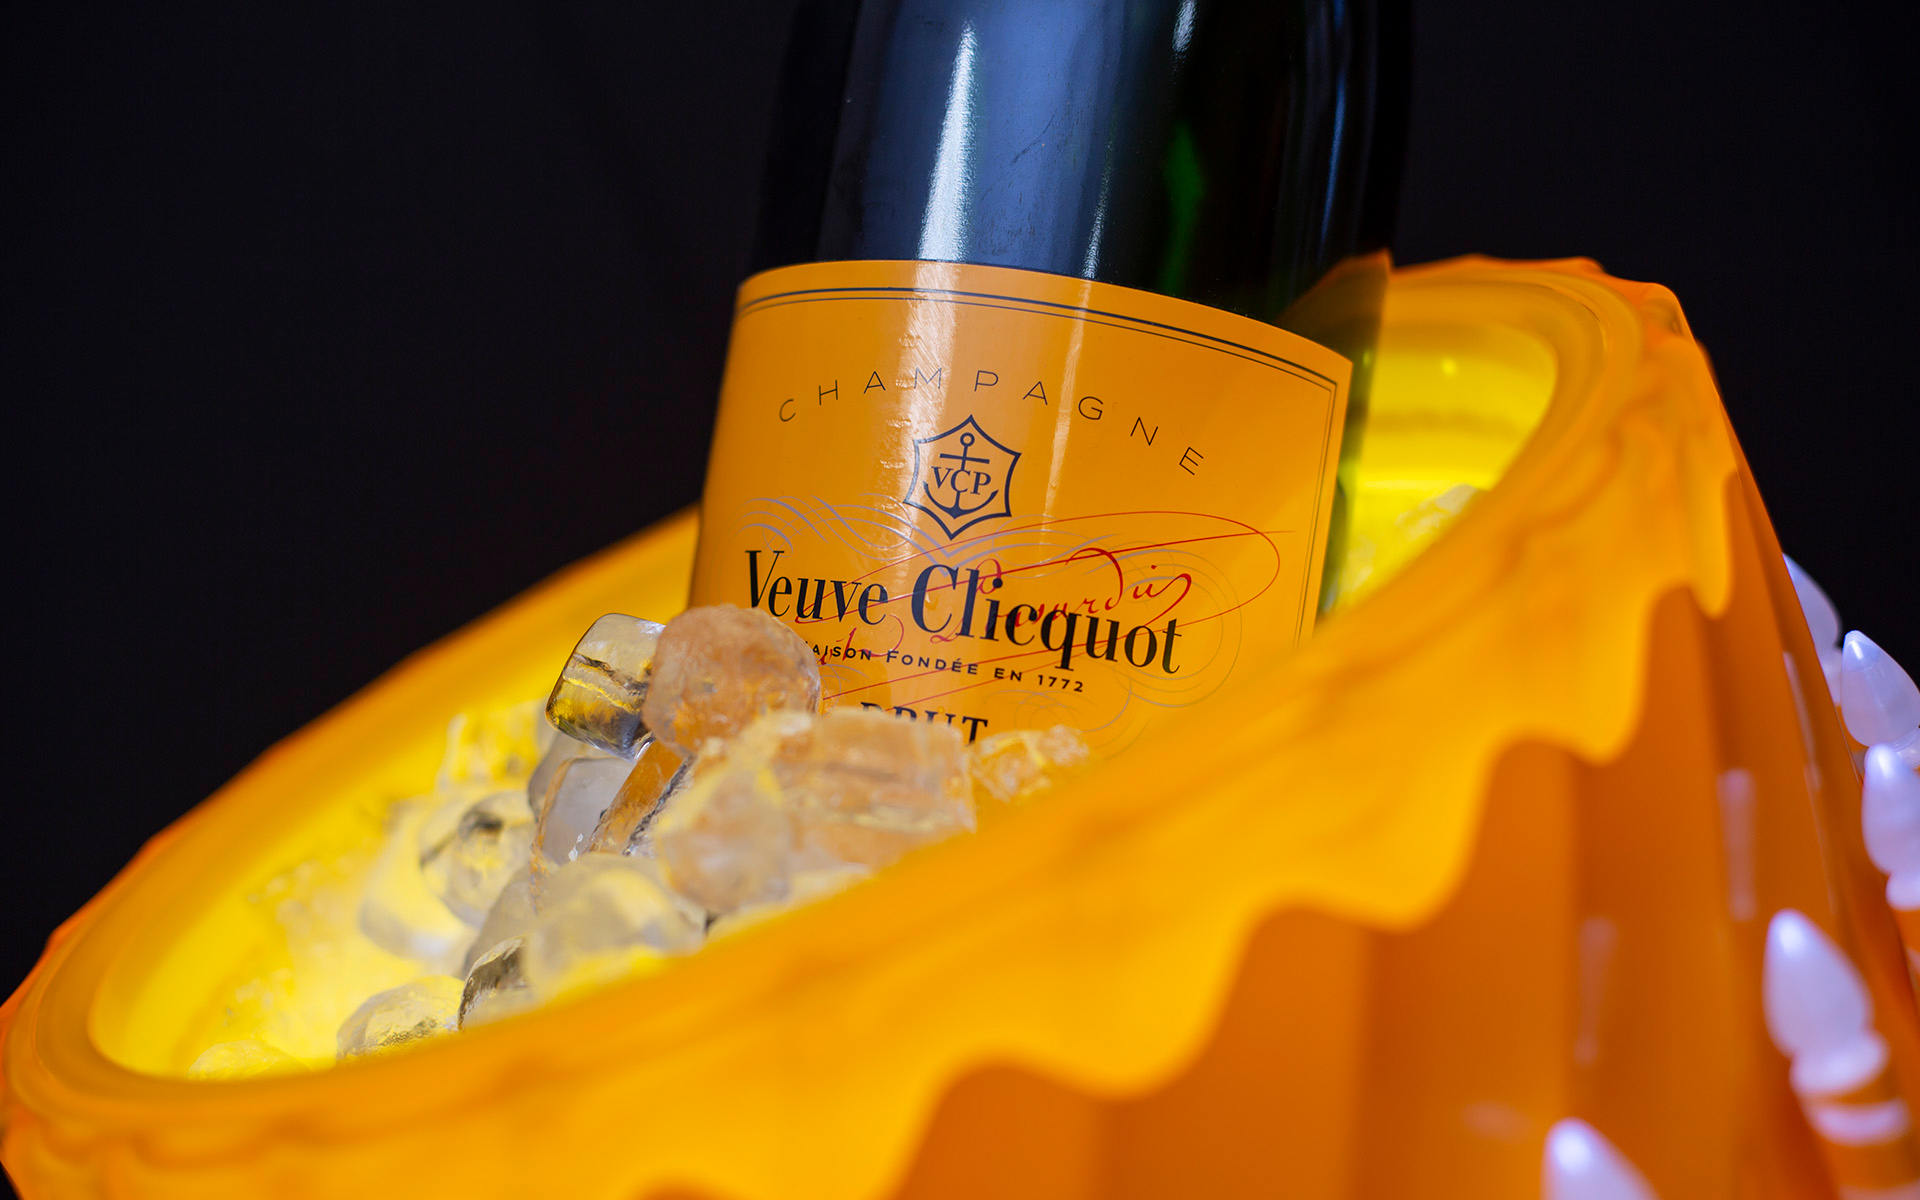 Clicquot K.WAY Champagne Veuve Clicquot